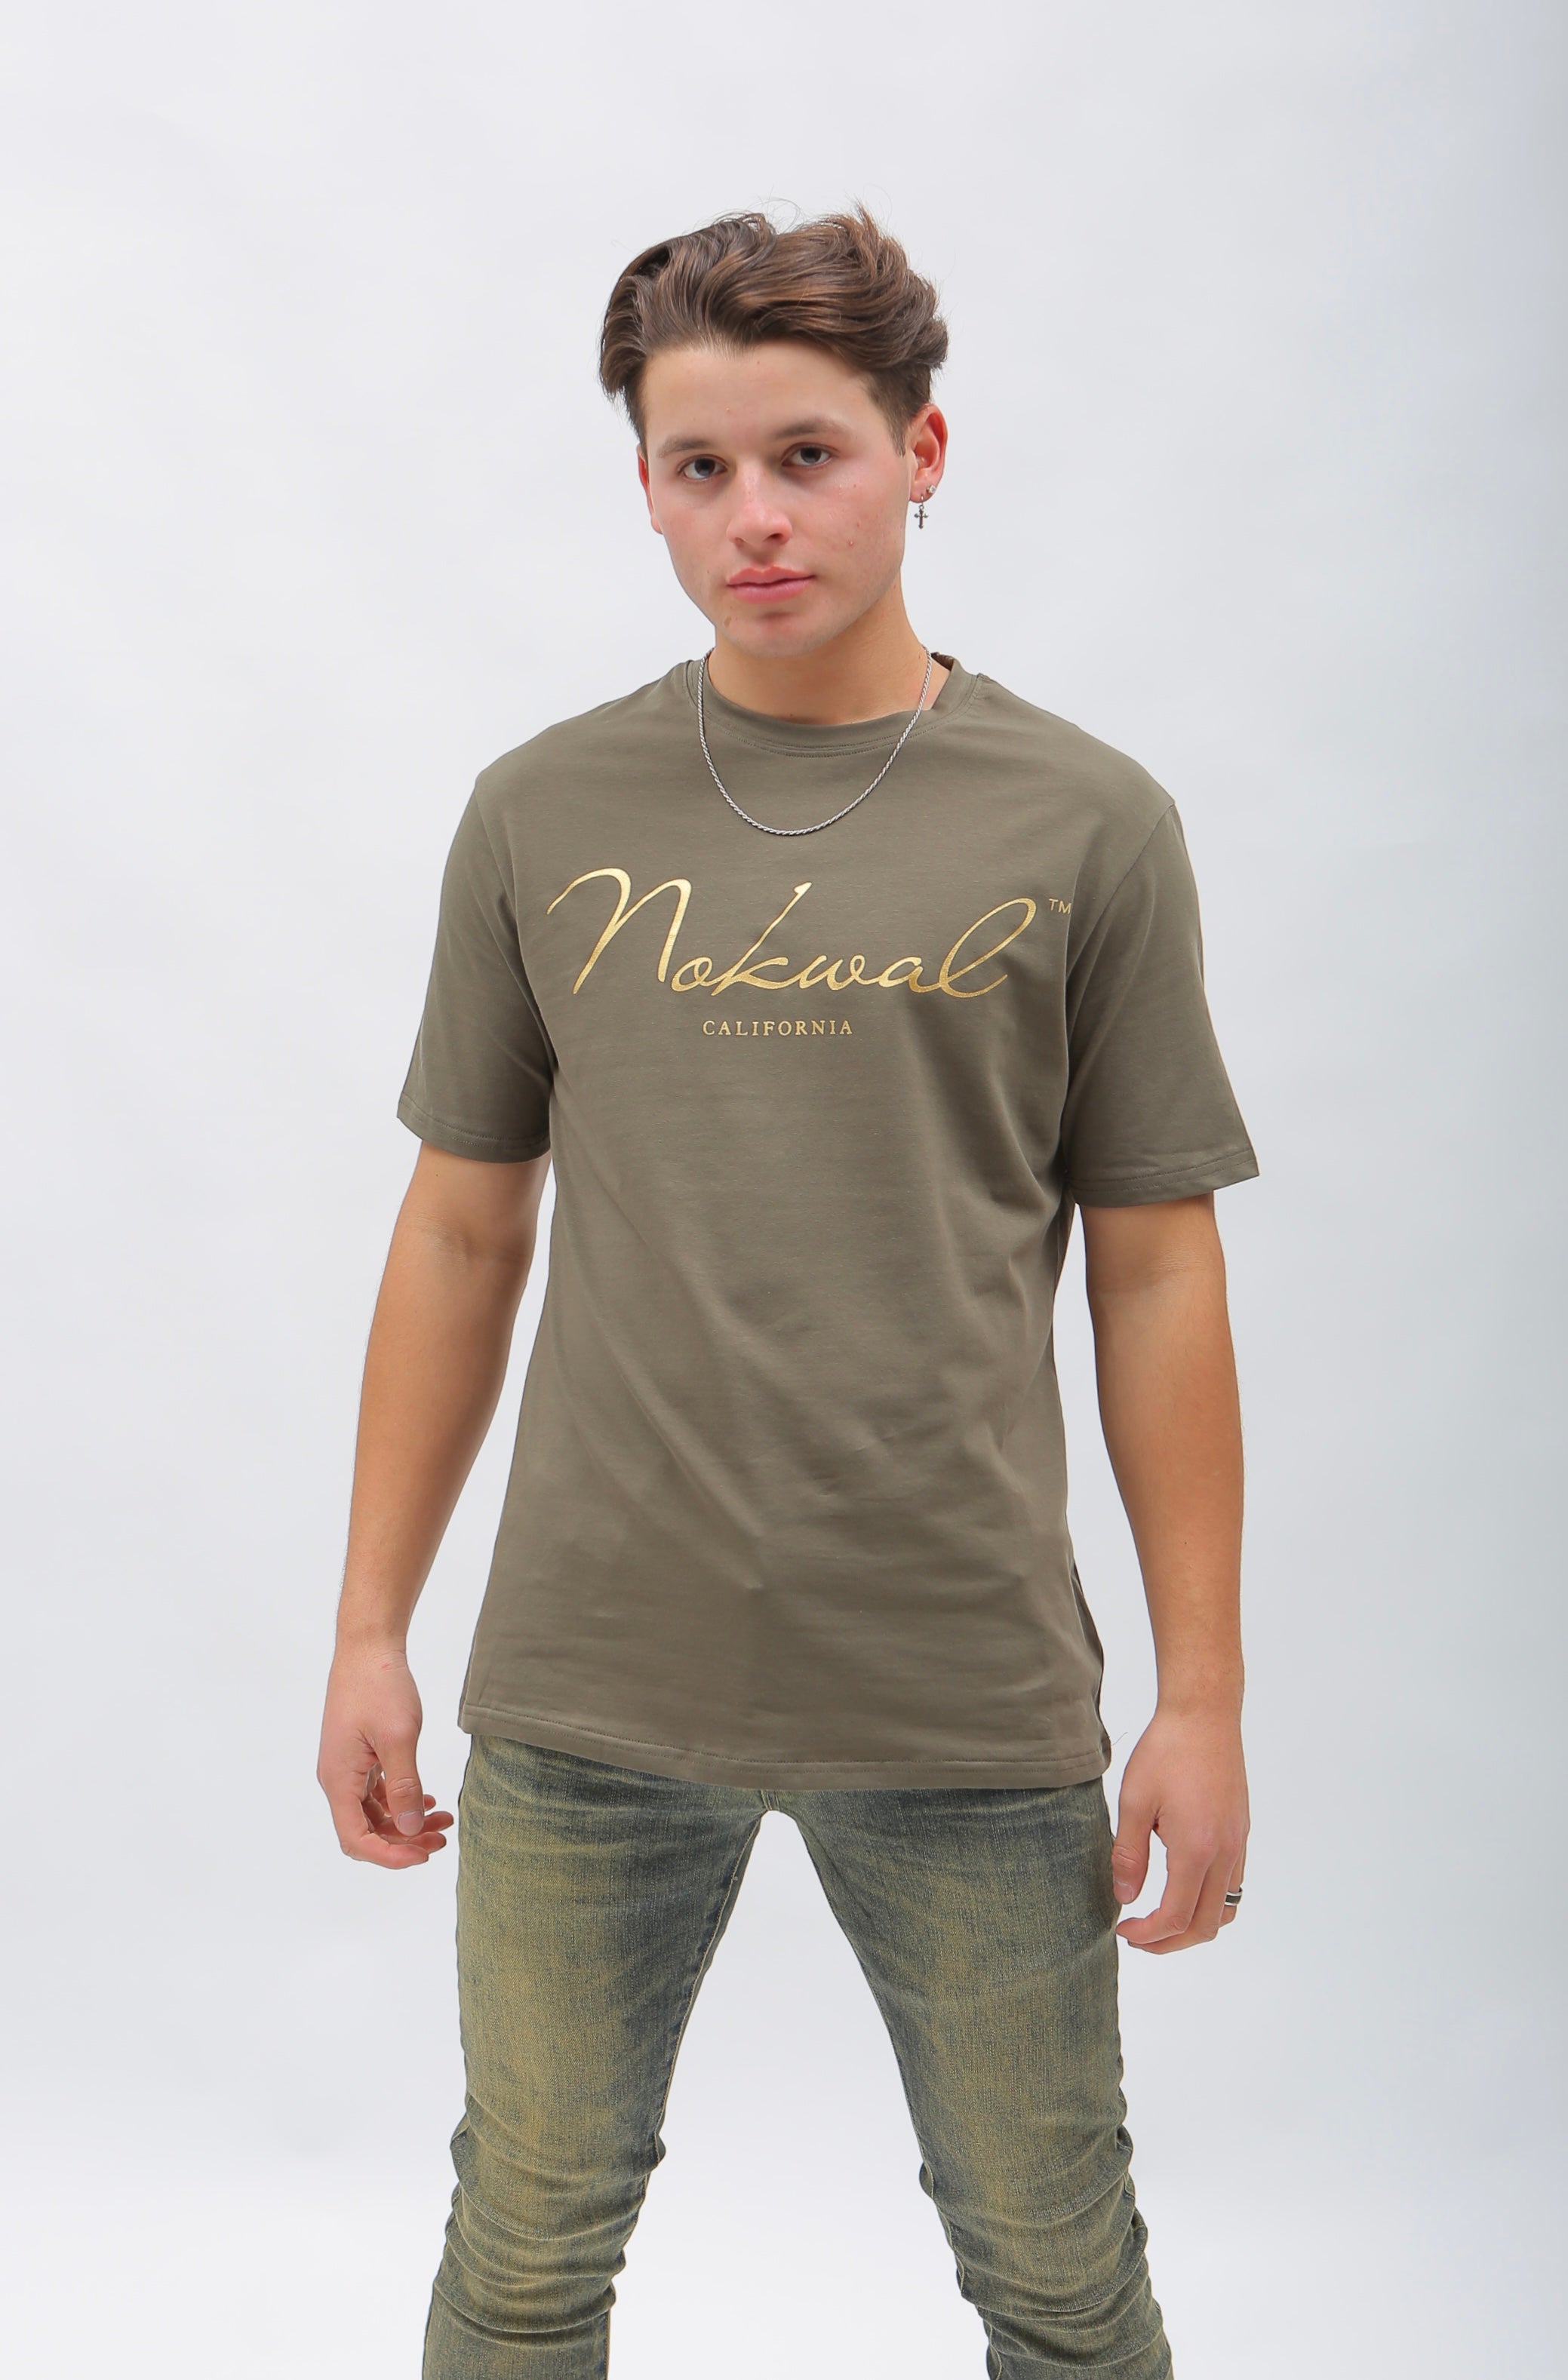 Olive T-Shirt w/ Gold Nokwal Signature